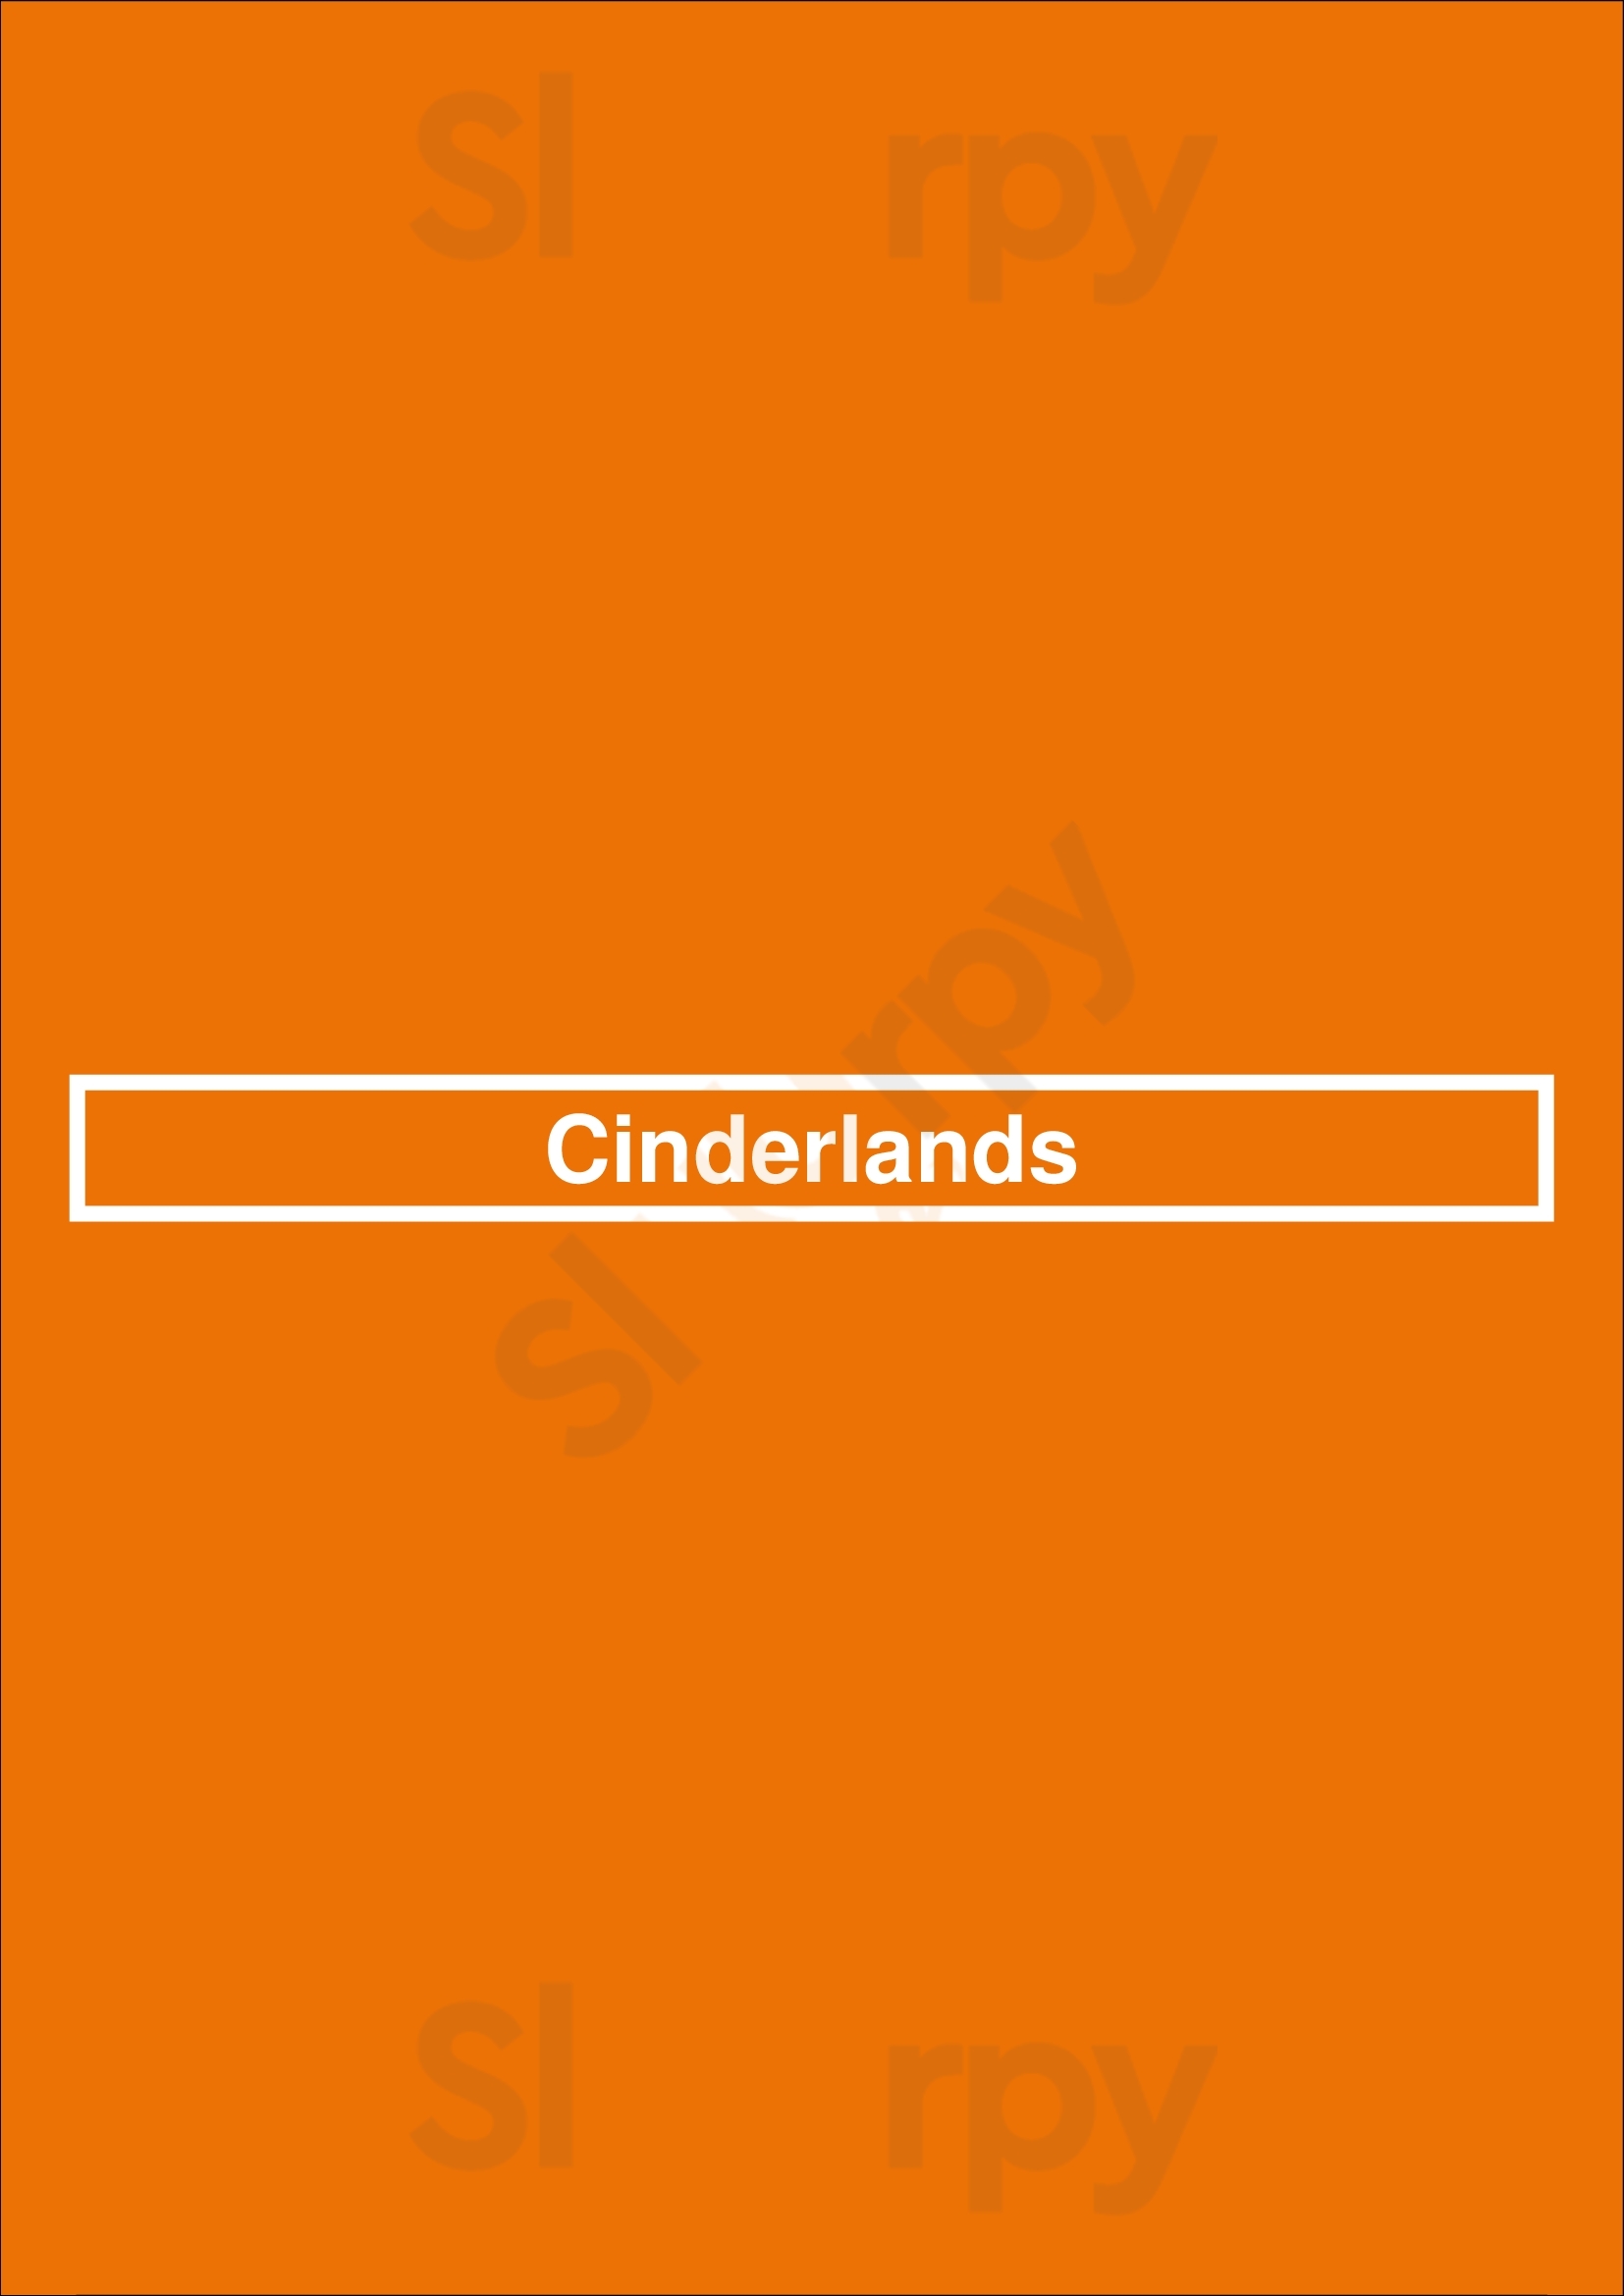 Cinderlands Pittsburgh Menu - 1